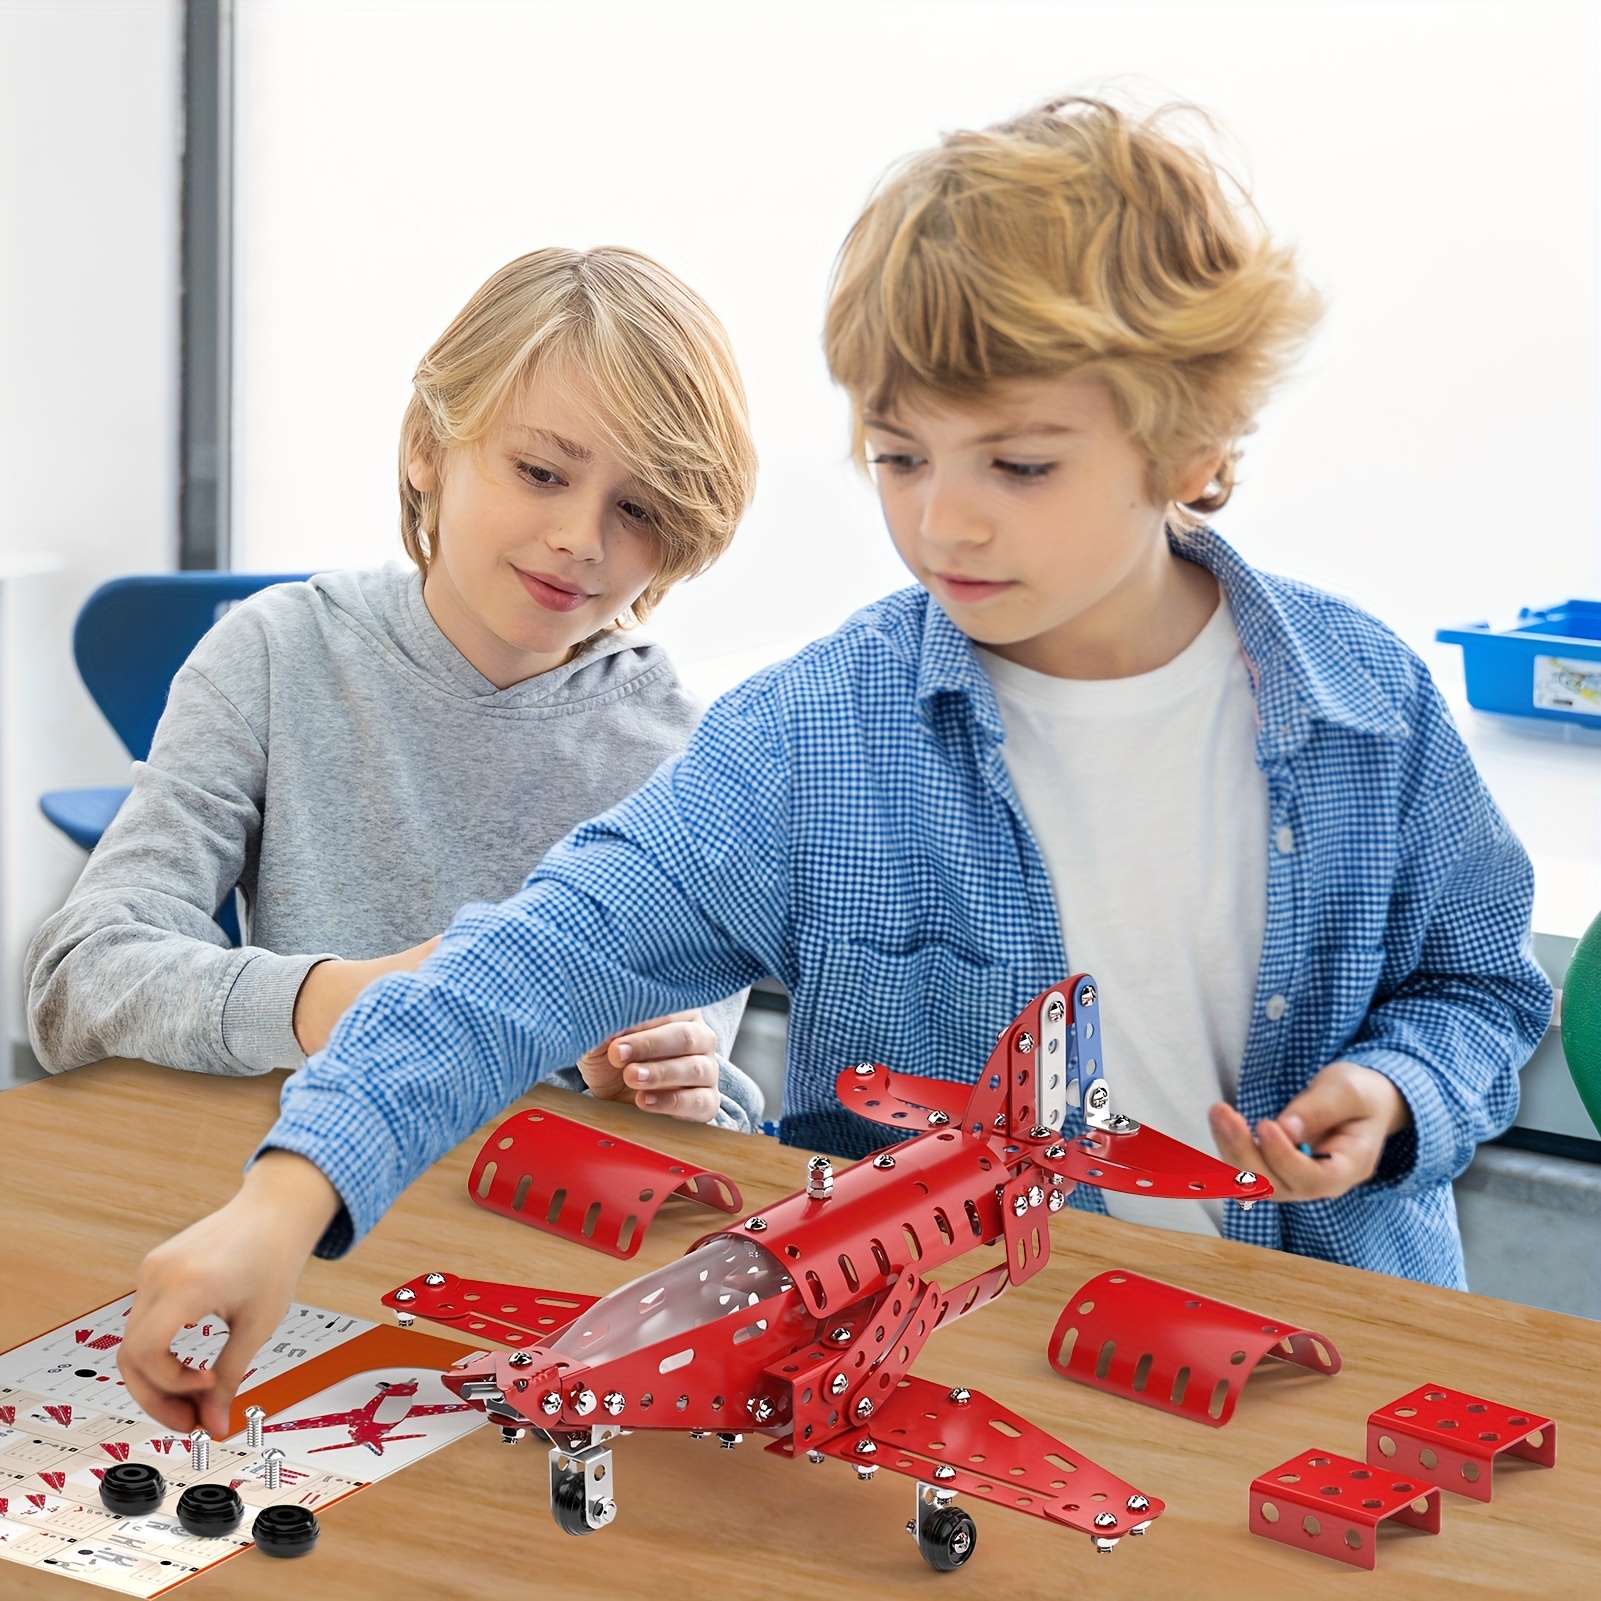  STEM Building Toys Model Airplane Kits for Boys 8-12